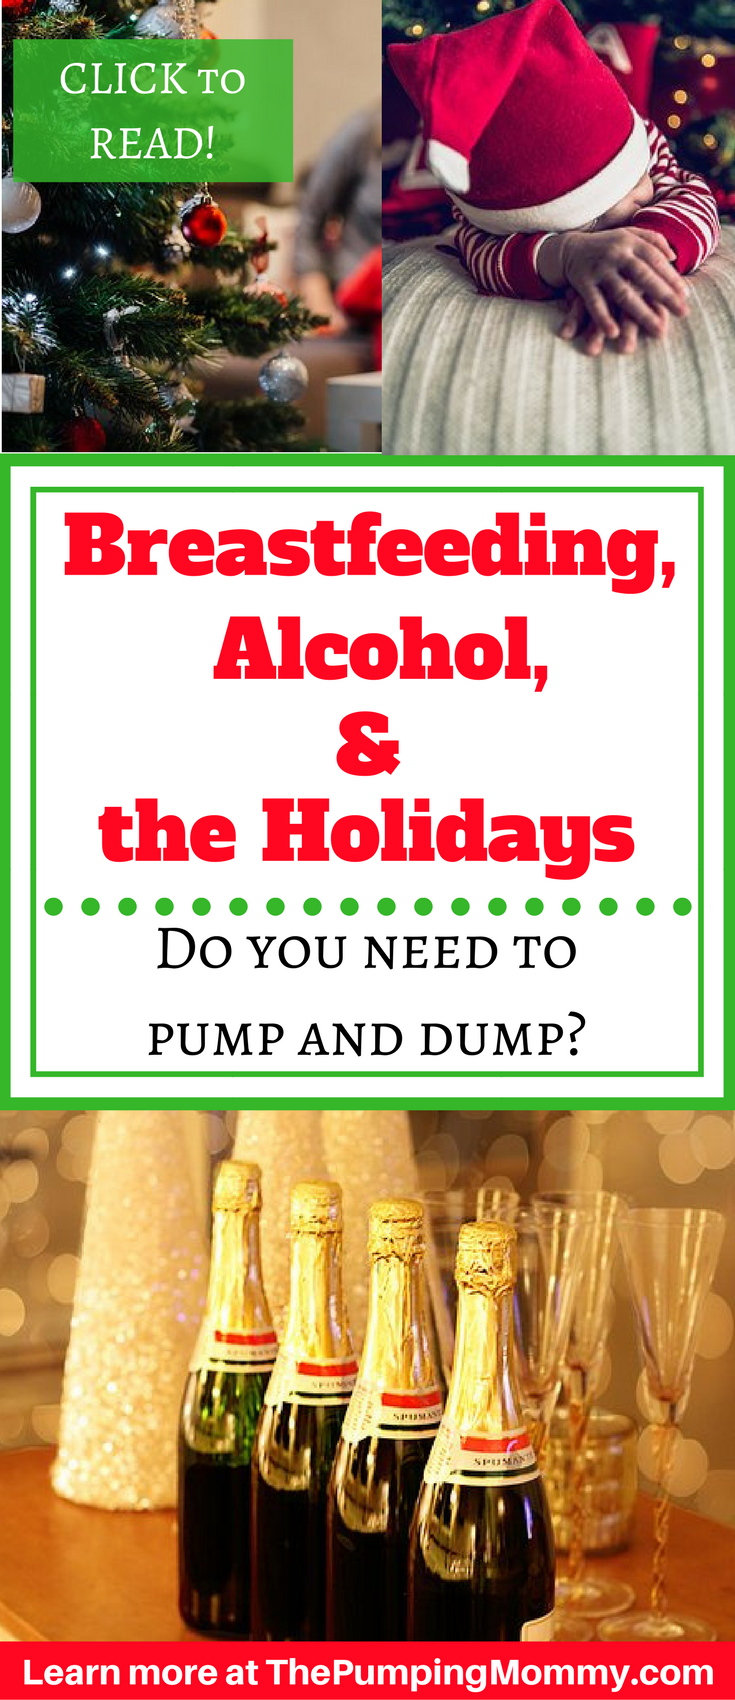 Breastfeeding-&-the-Holidays